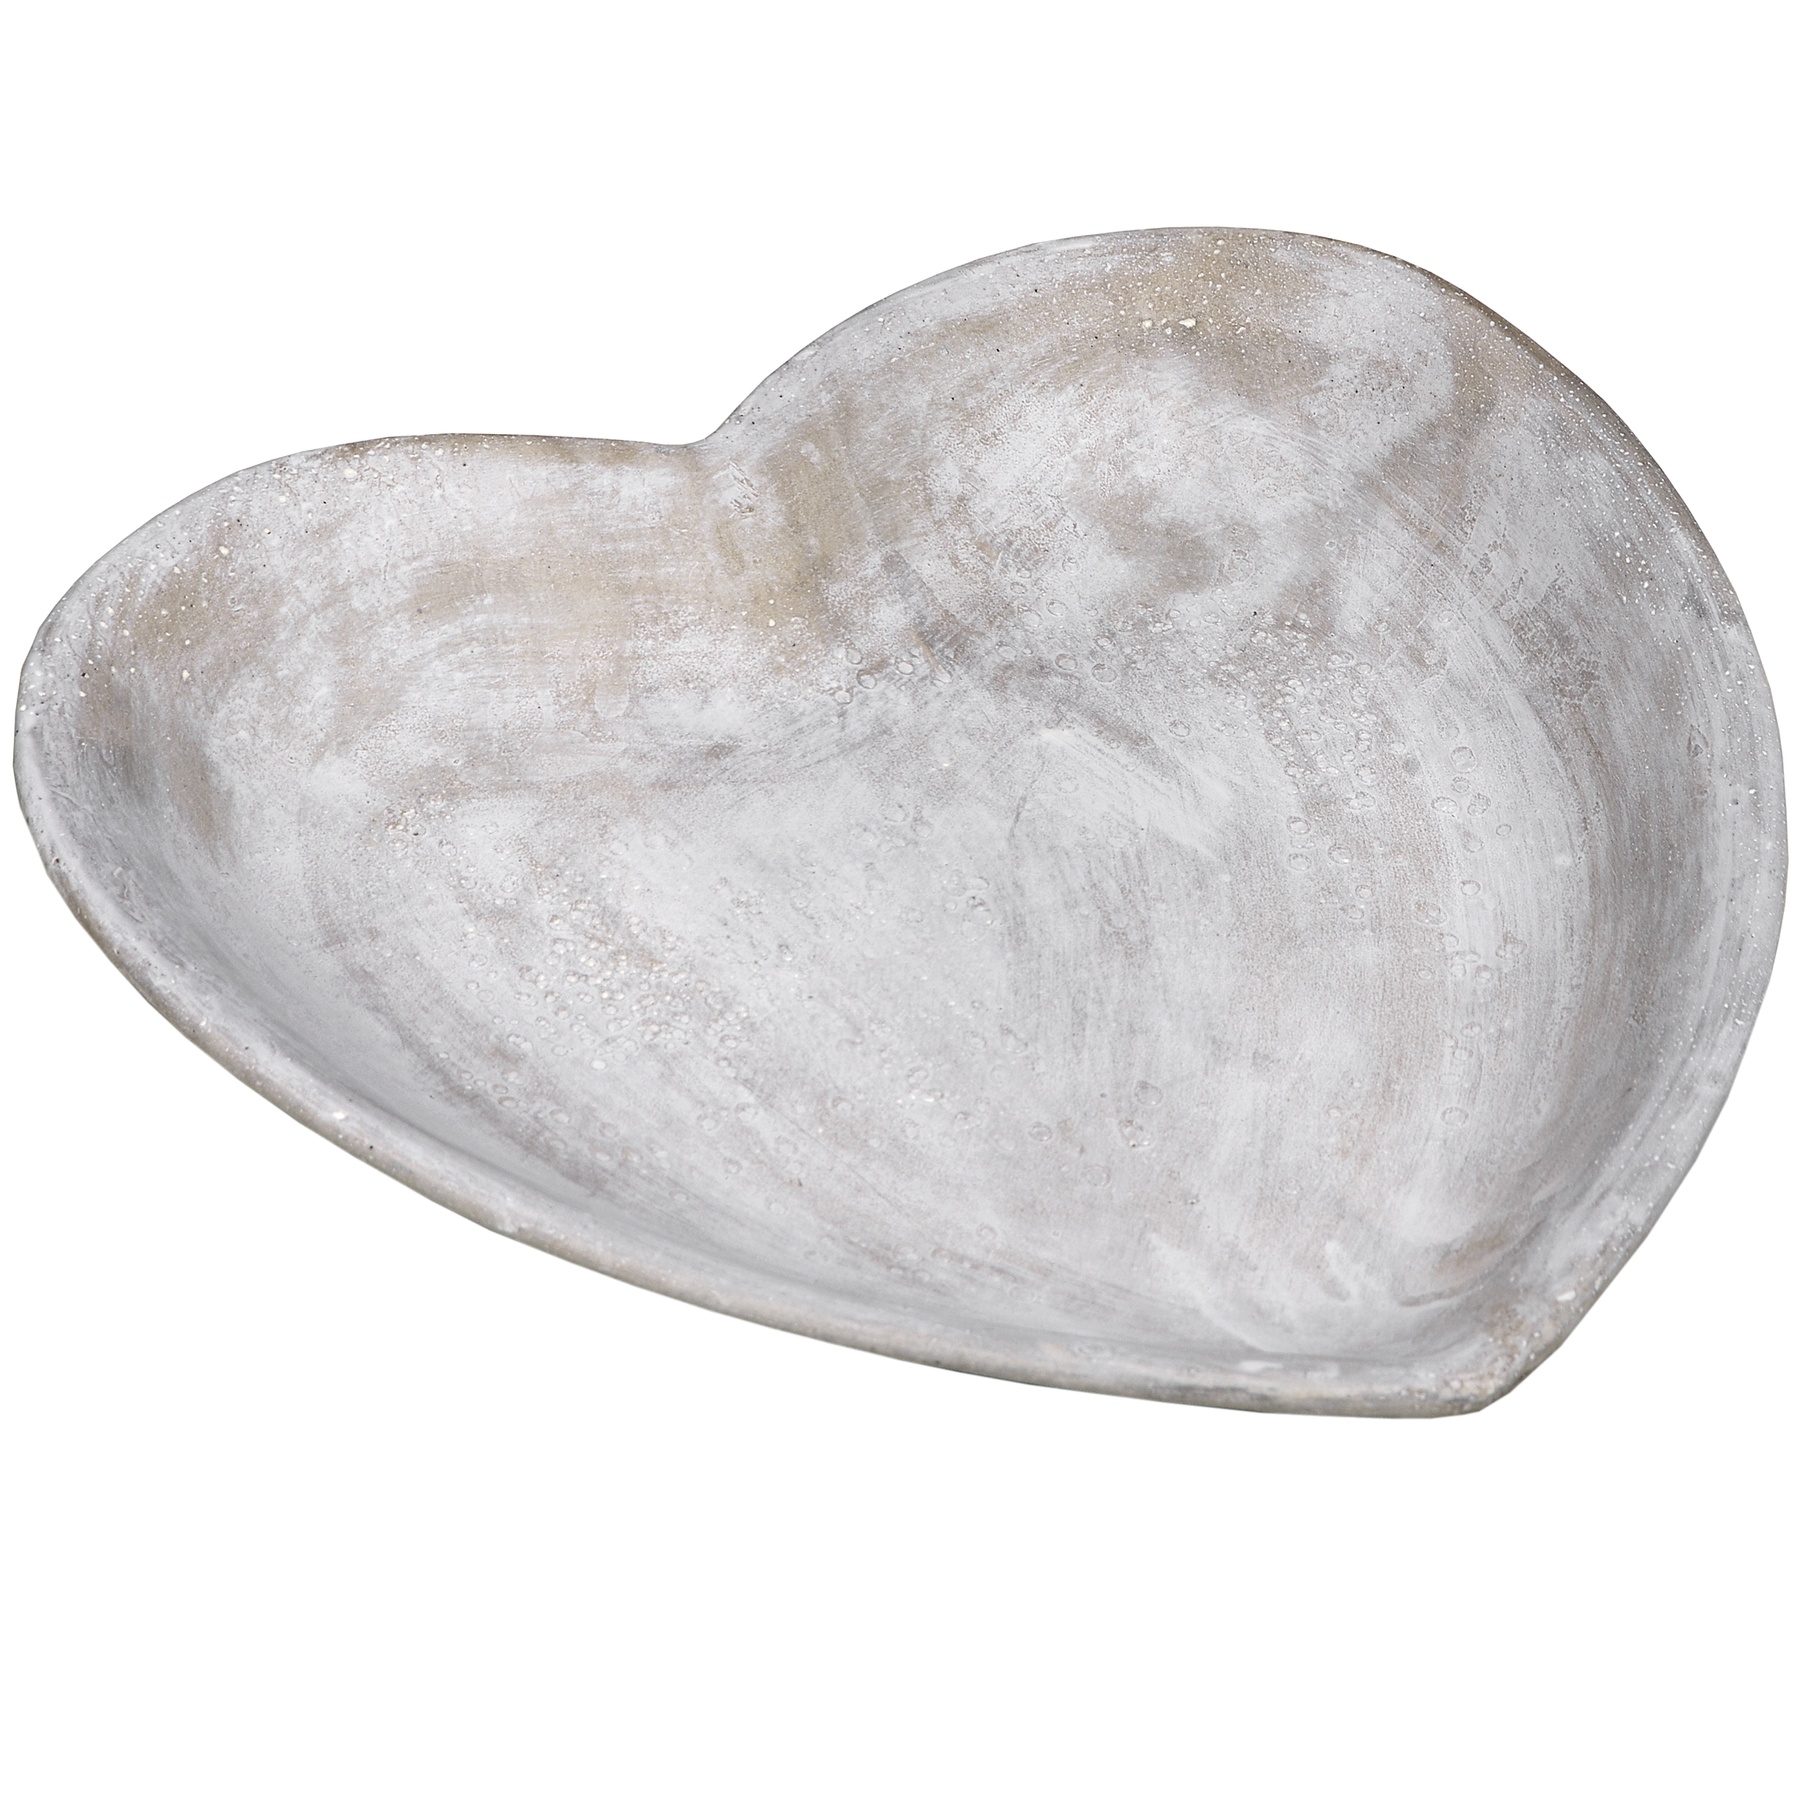 Stone Heart Dish - Image 1